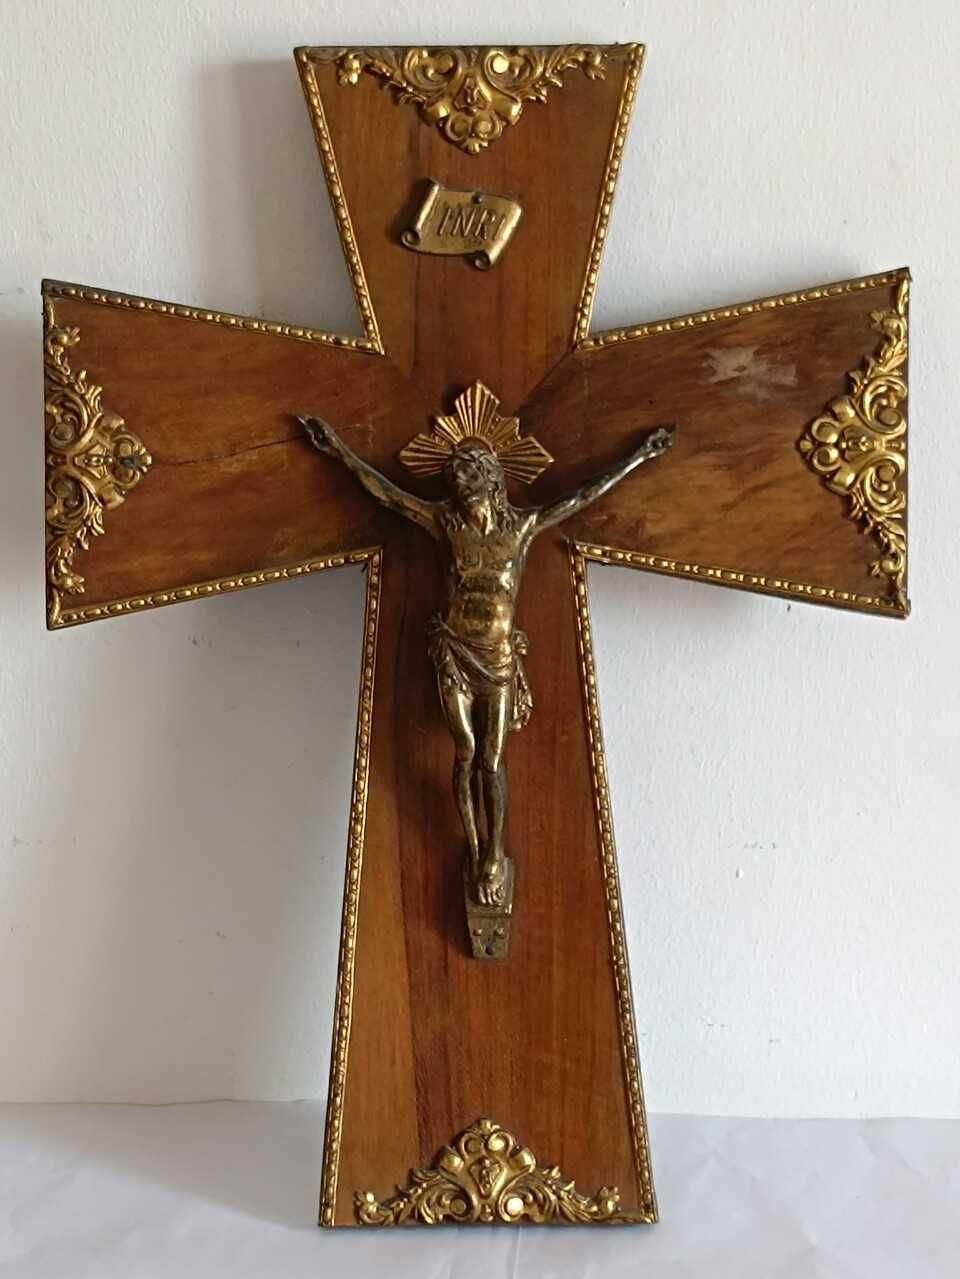 Icoane vechi pe lemn 6b doc. export si autentificare, crucifix bronz